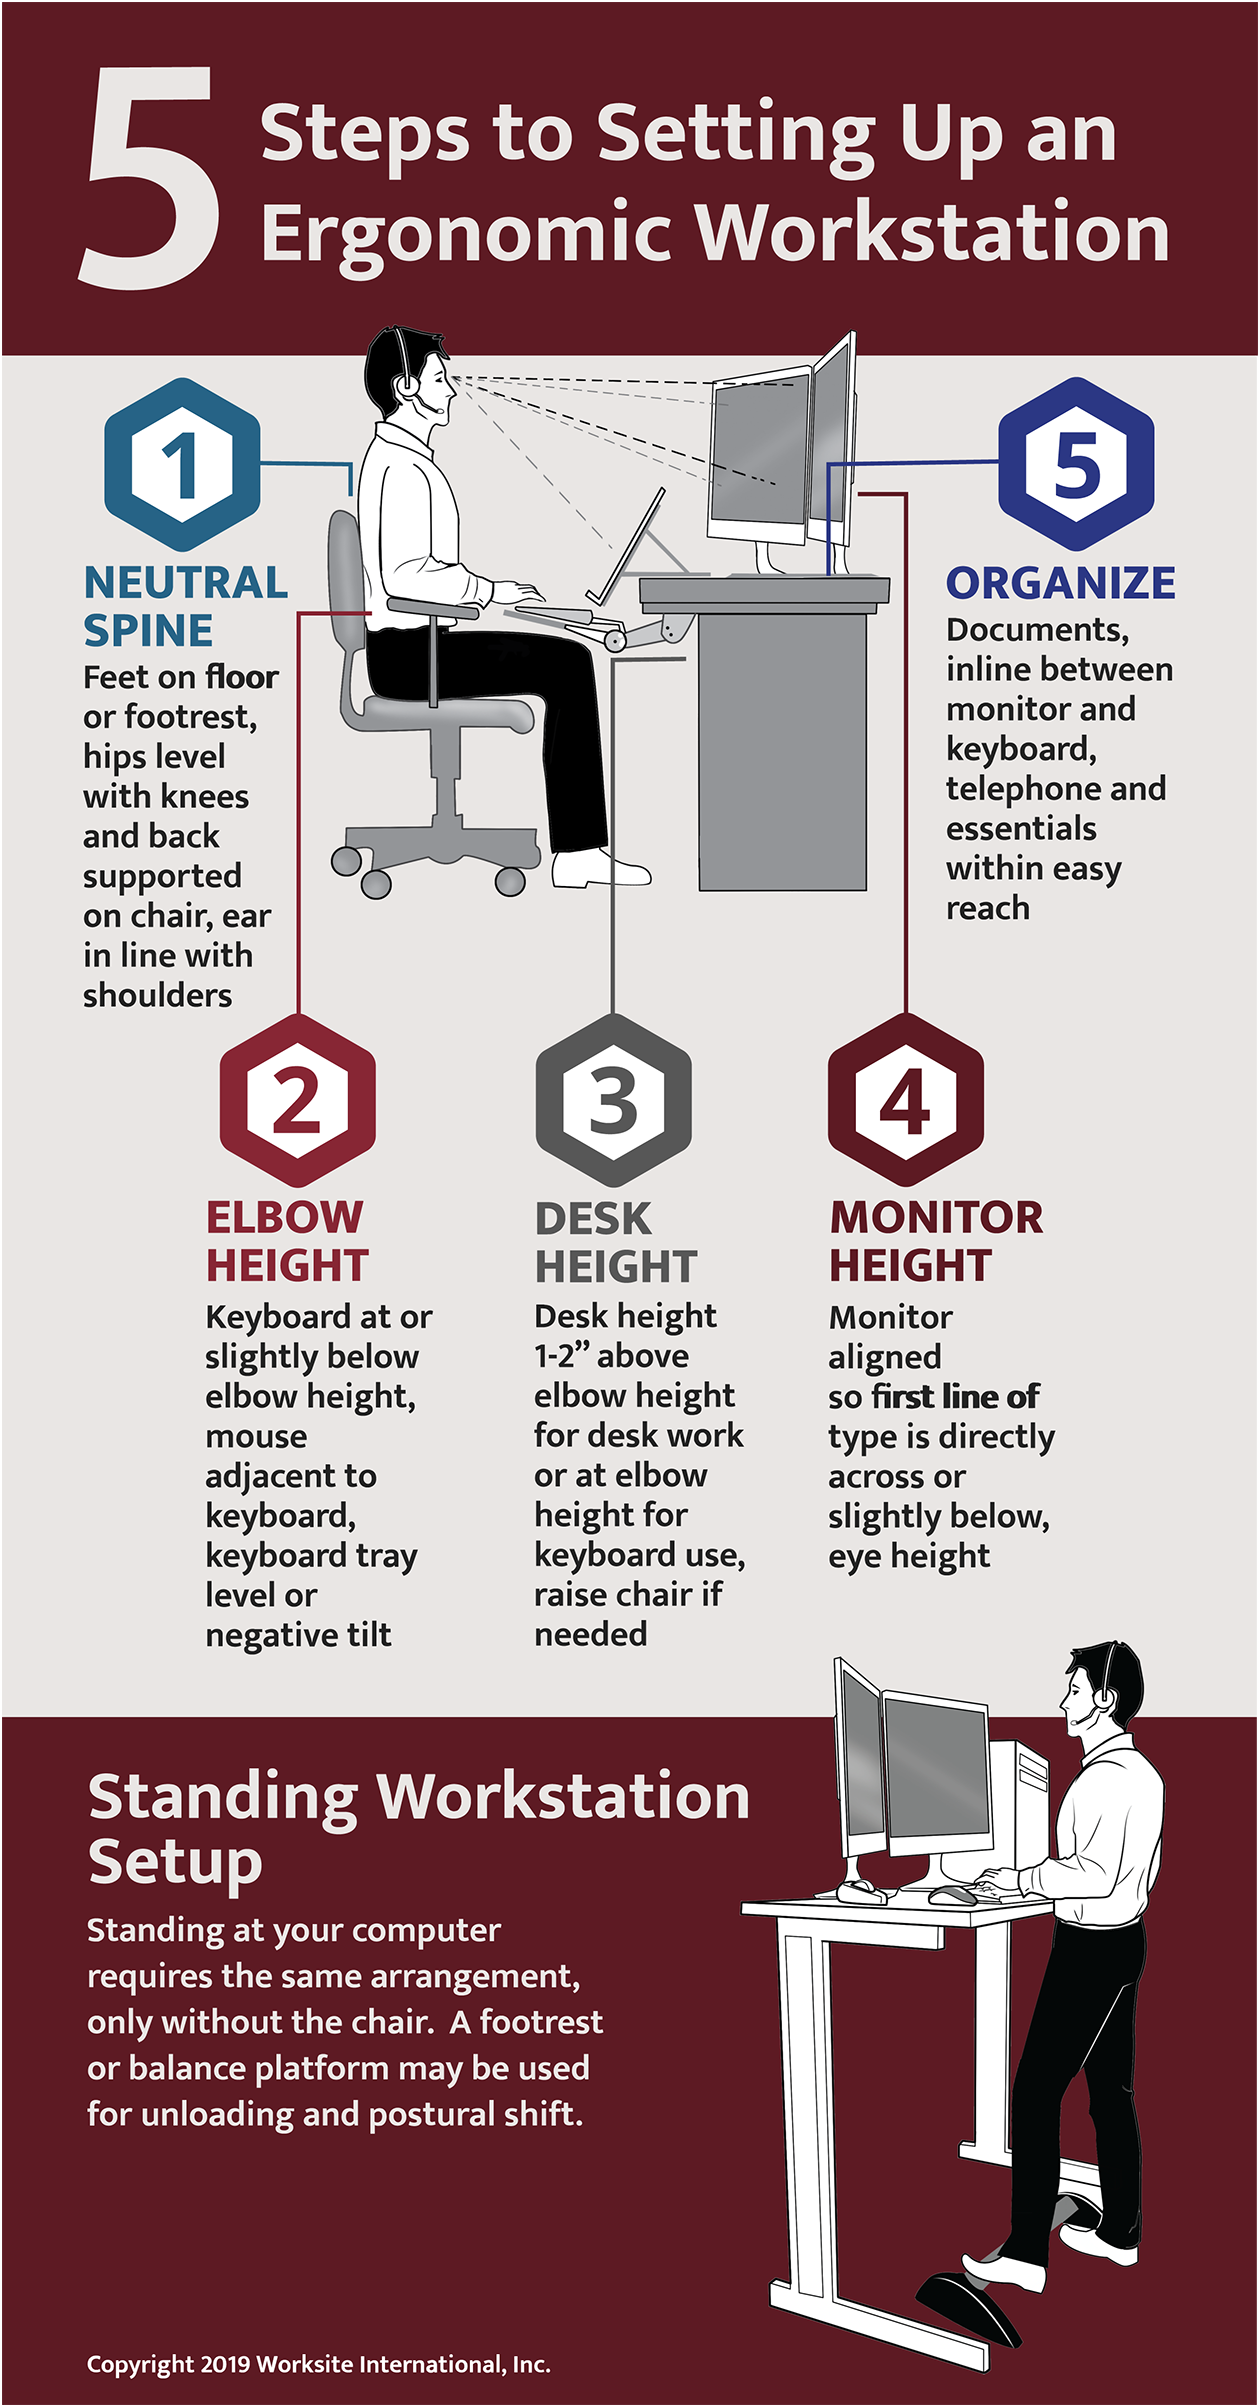 https://www.worksiteinternational.com/hubfs/images/blog/5-steps-to-setting-up-an-ergonomic-workstation-infographic-1260px.png